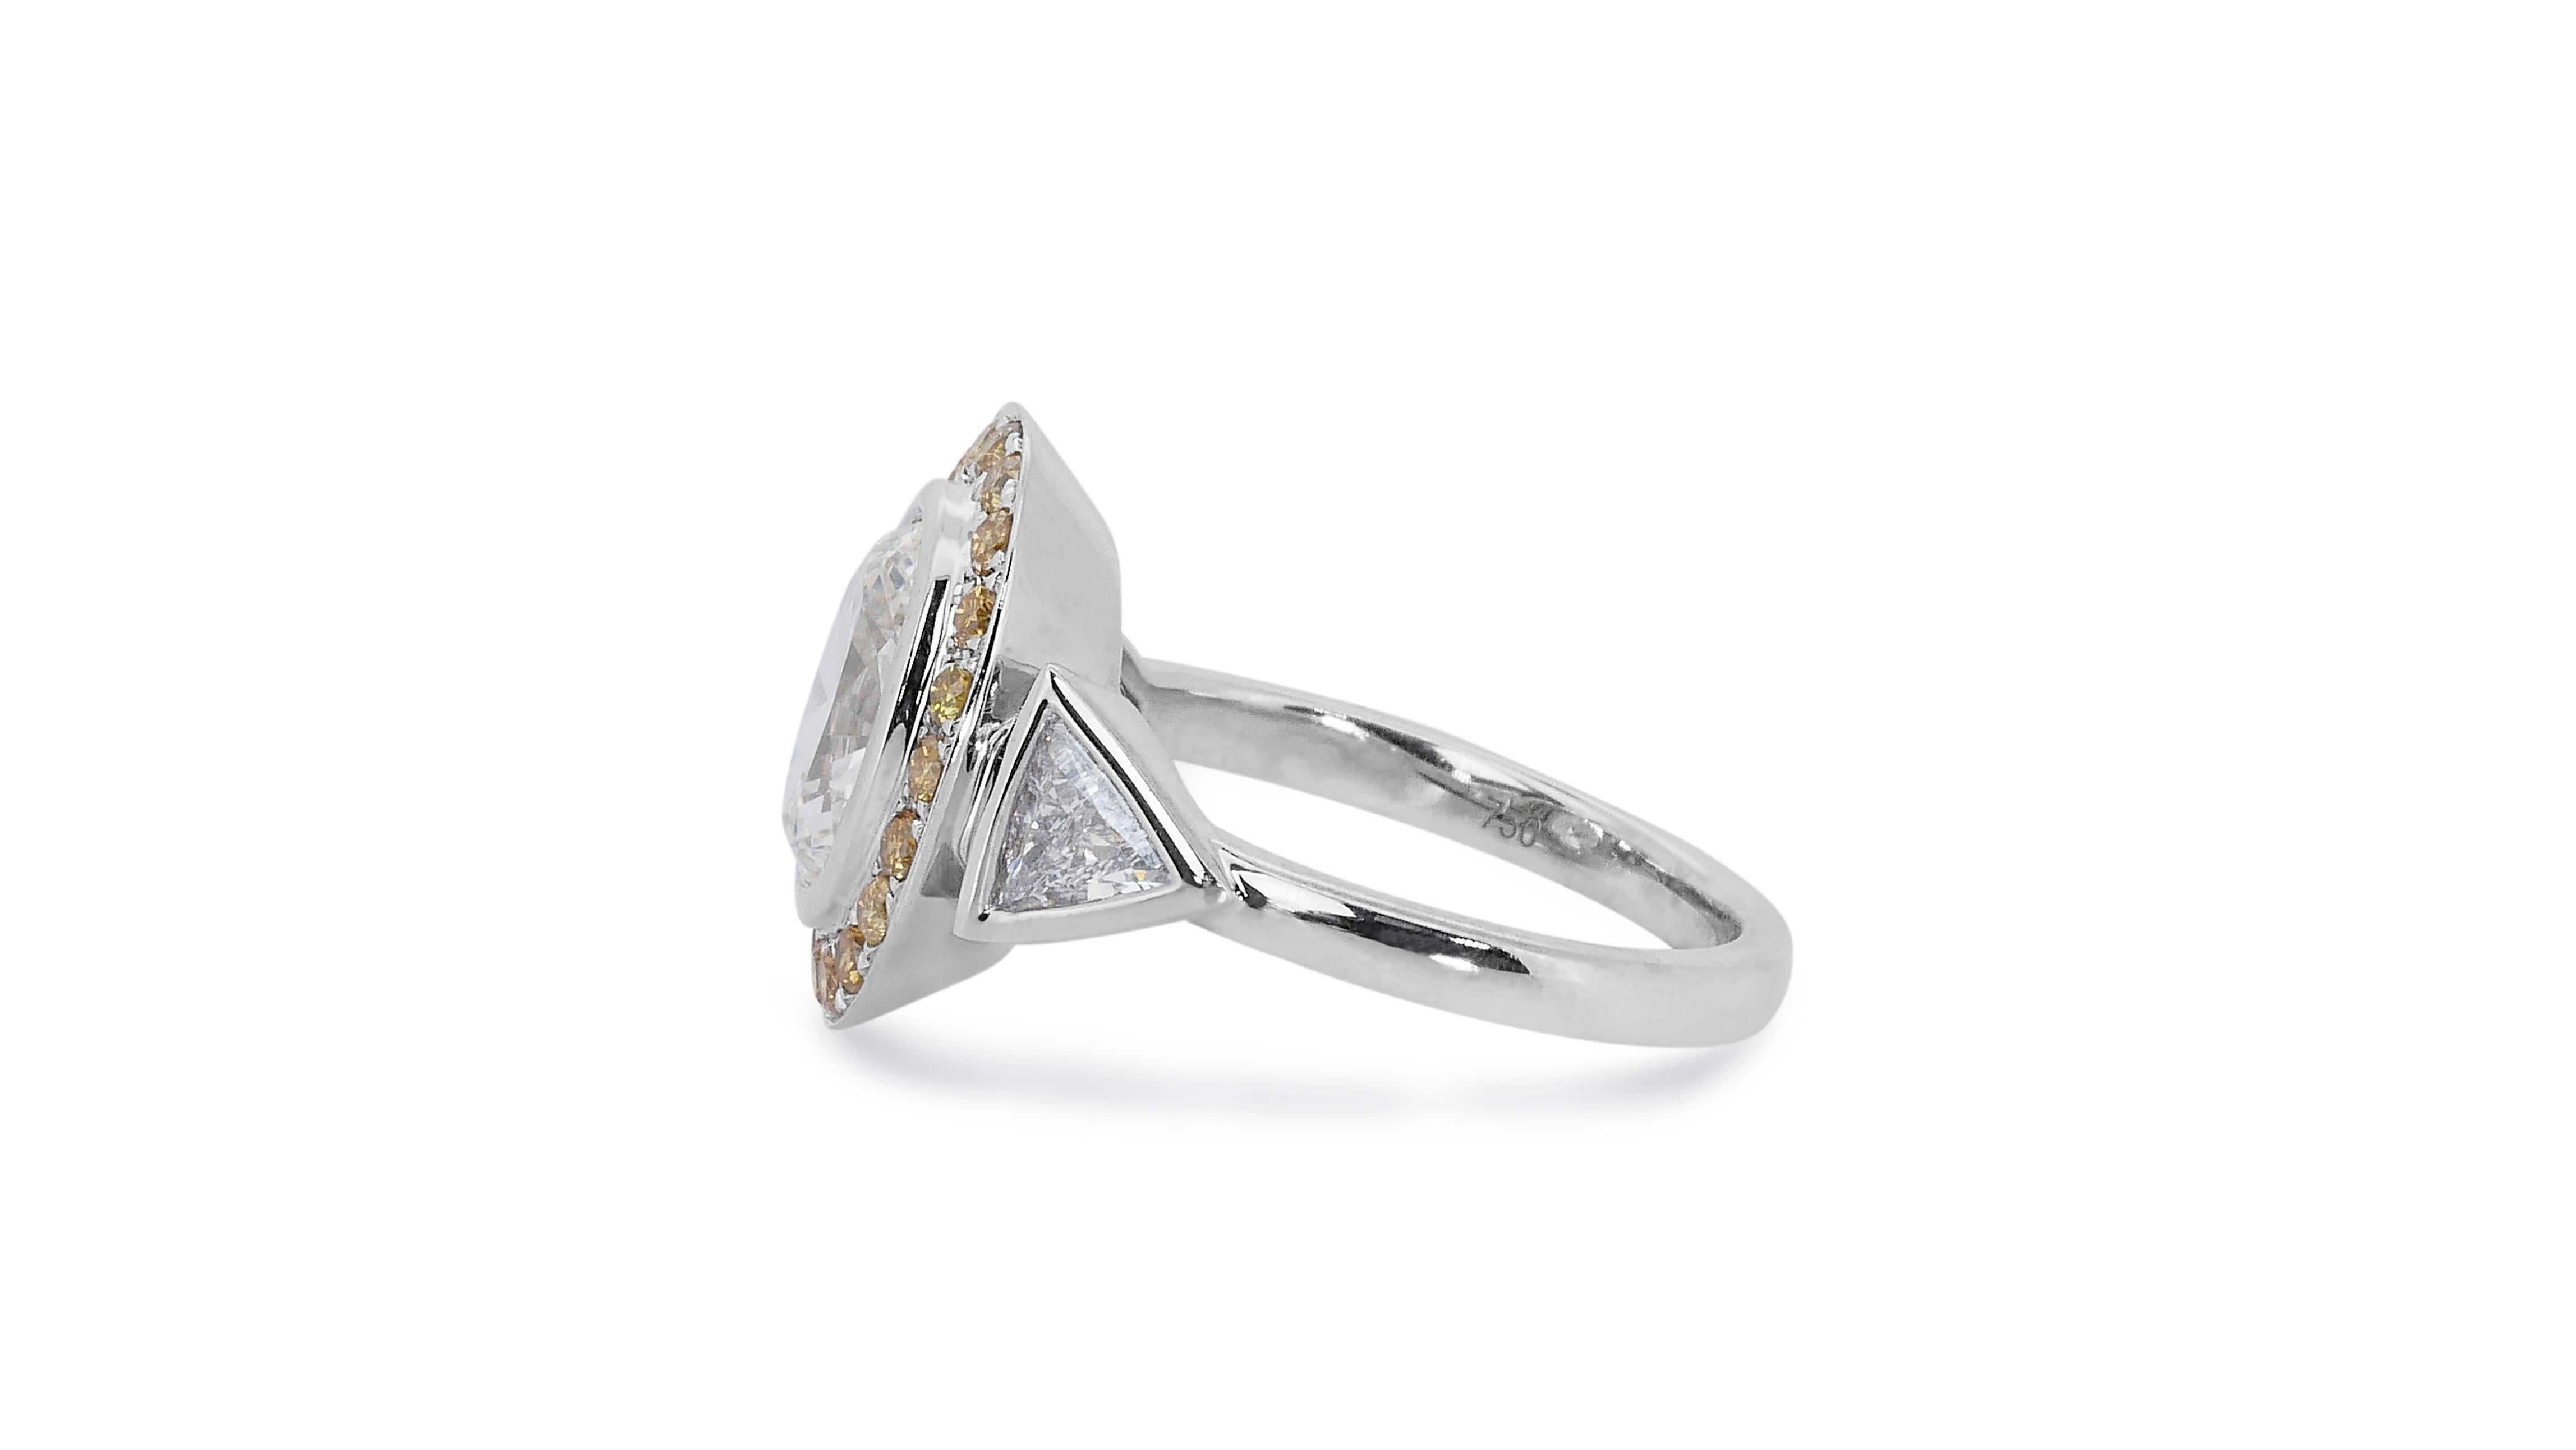 Ravishing 18k White Gold Oval Ring w/ 1.90ct Natural Diamonds IGI Certificate For Sale 2